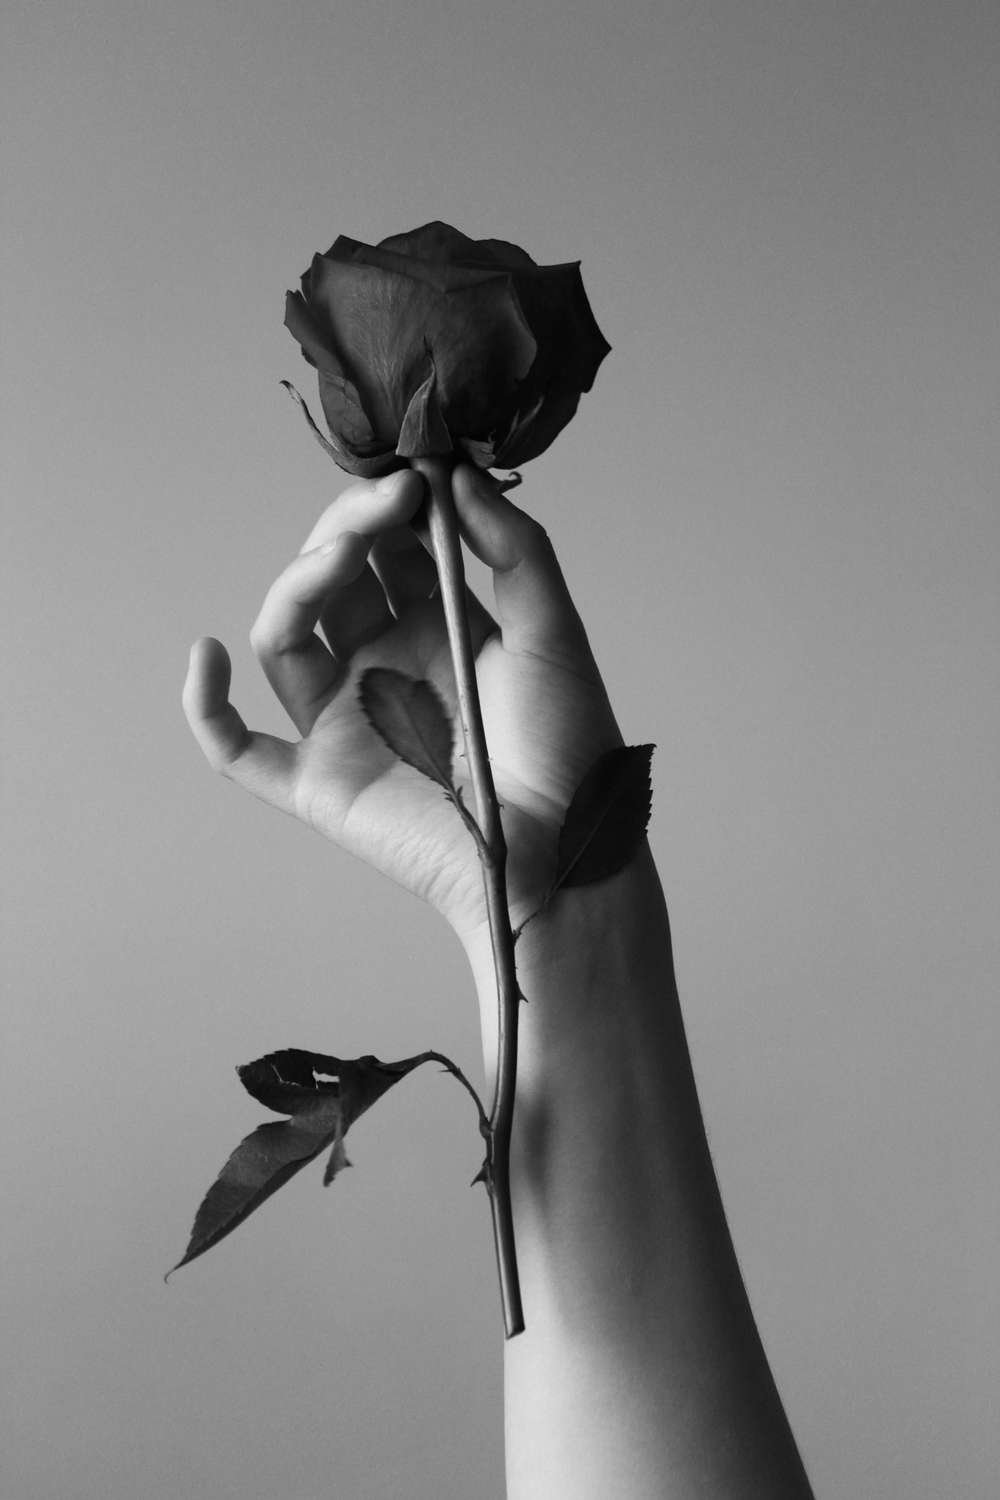 1 Роза Фото В Руке Девушки